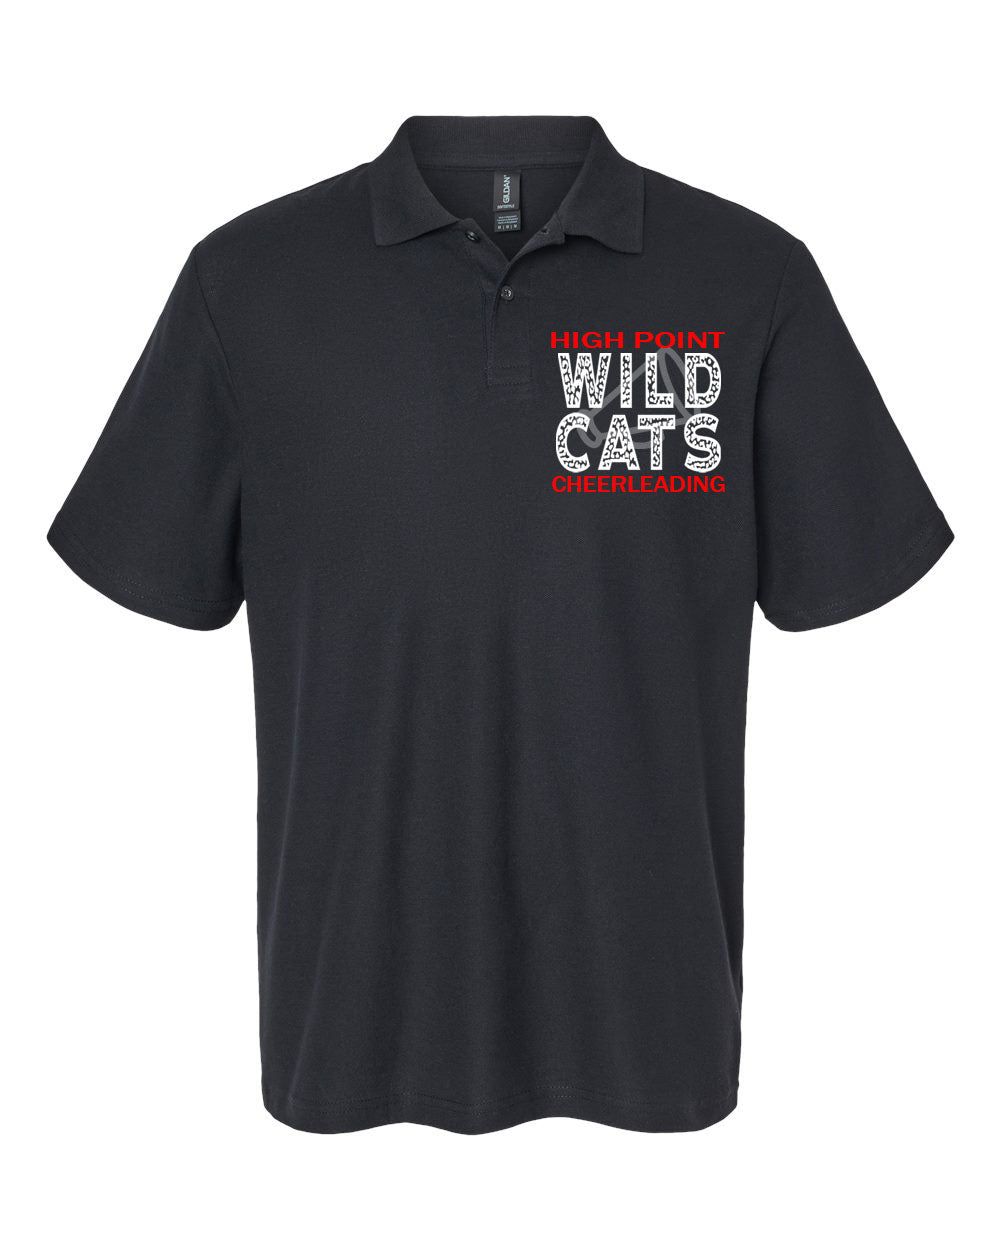 Wildcats Cheer Design 1 Polo T-Shirt